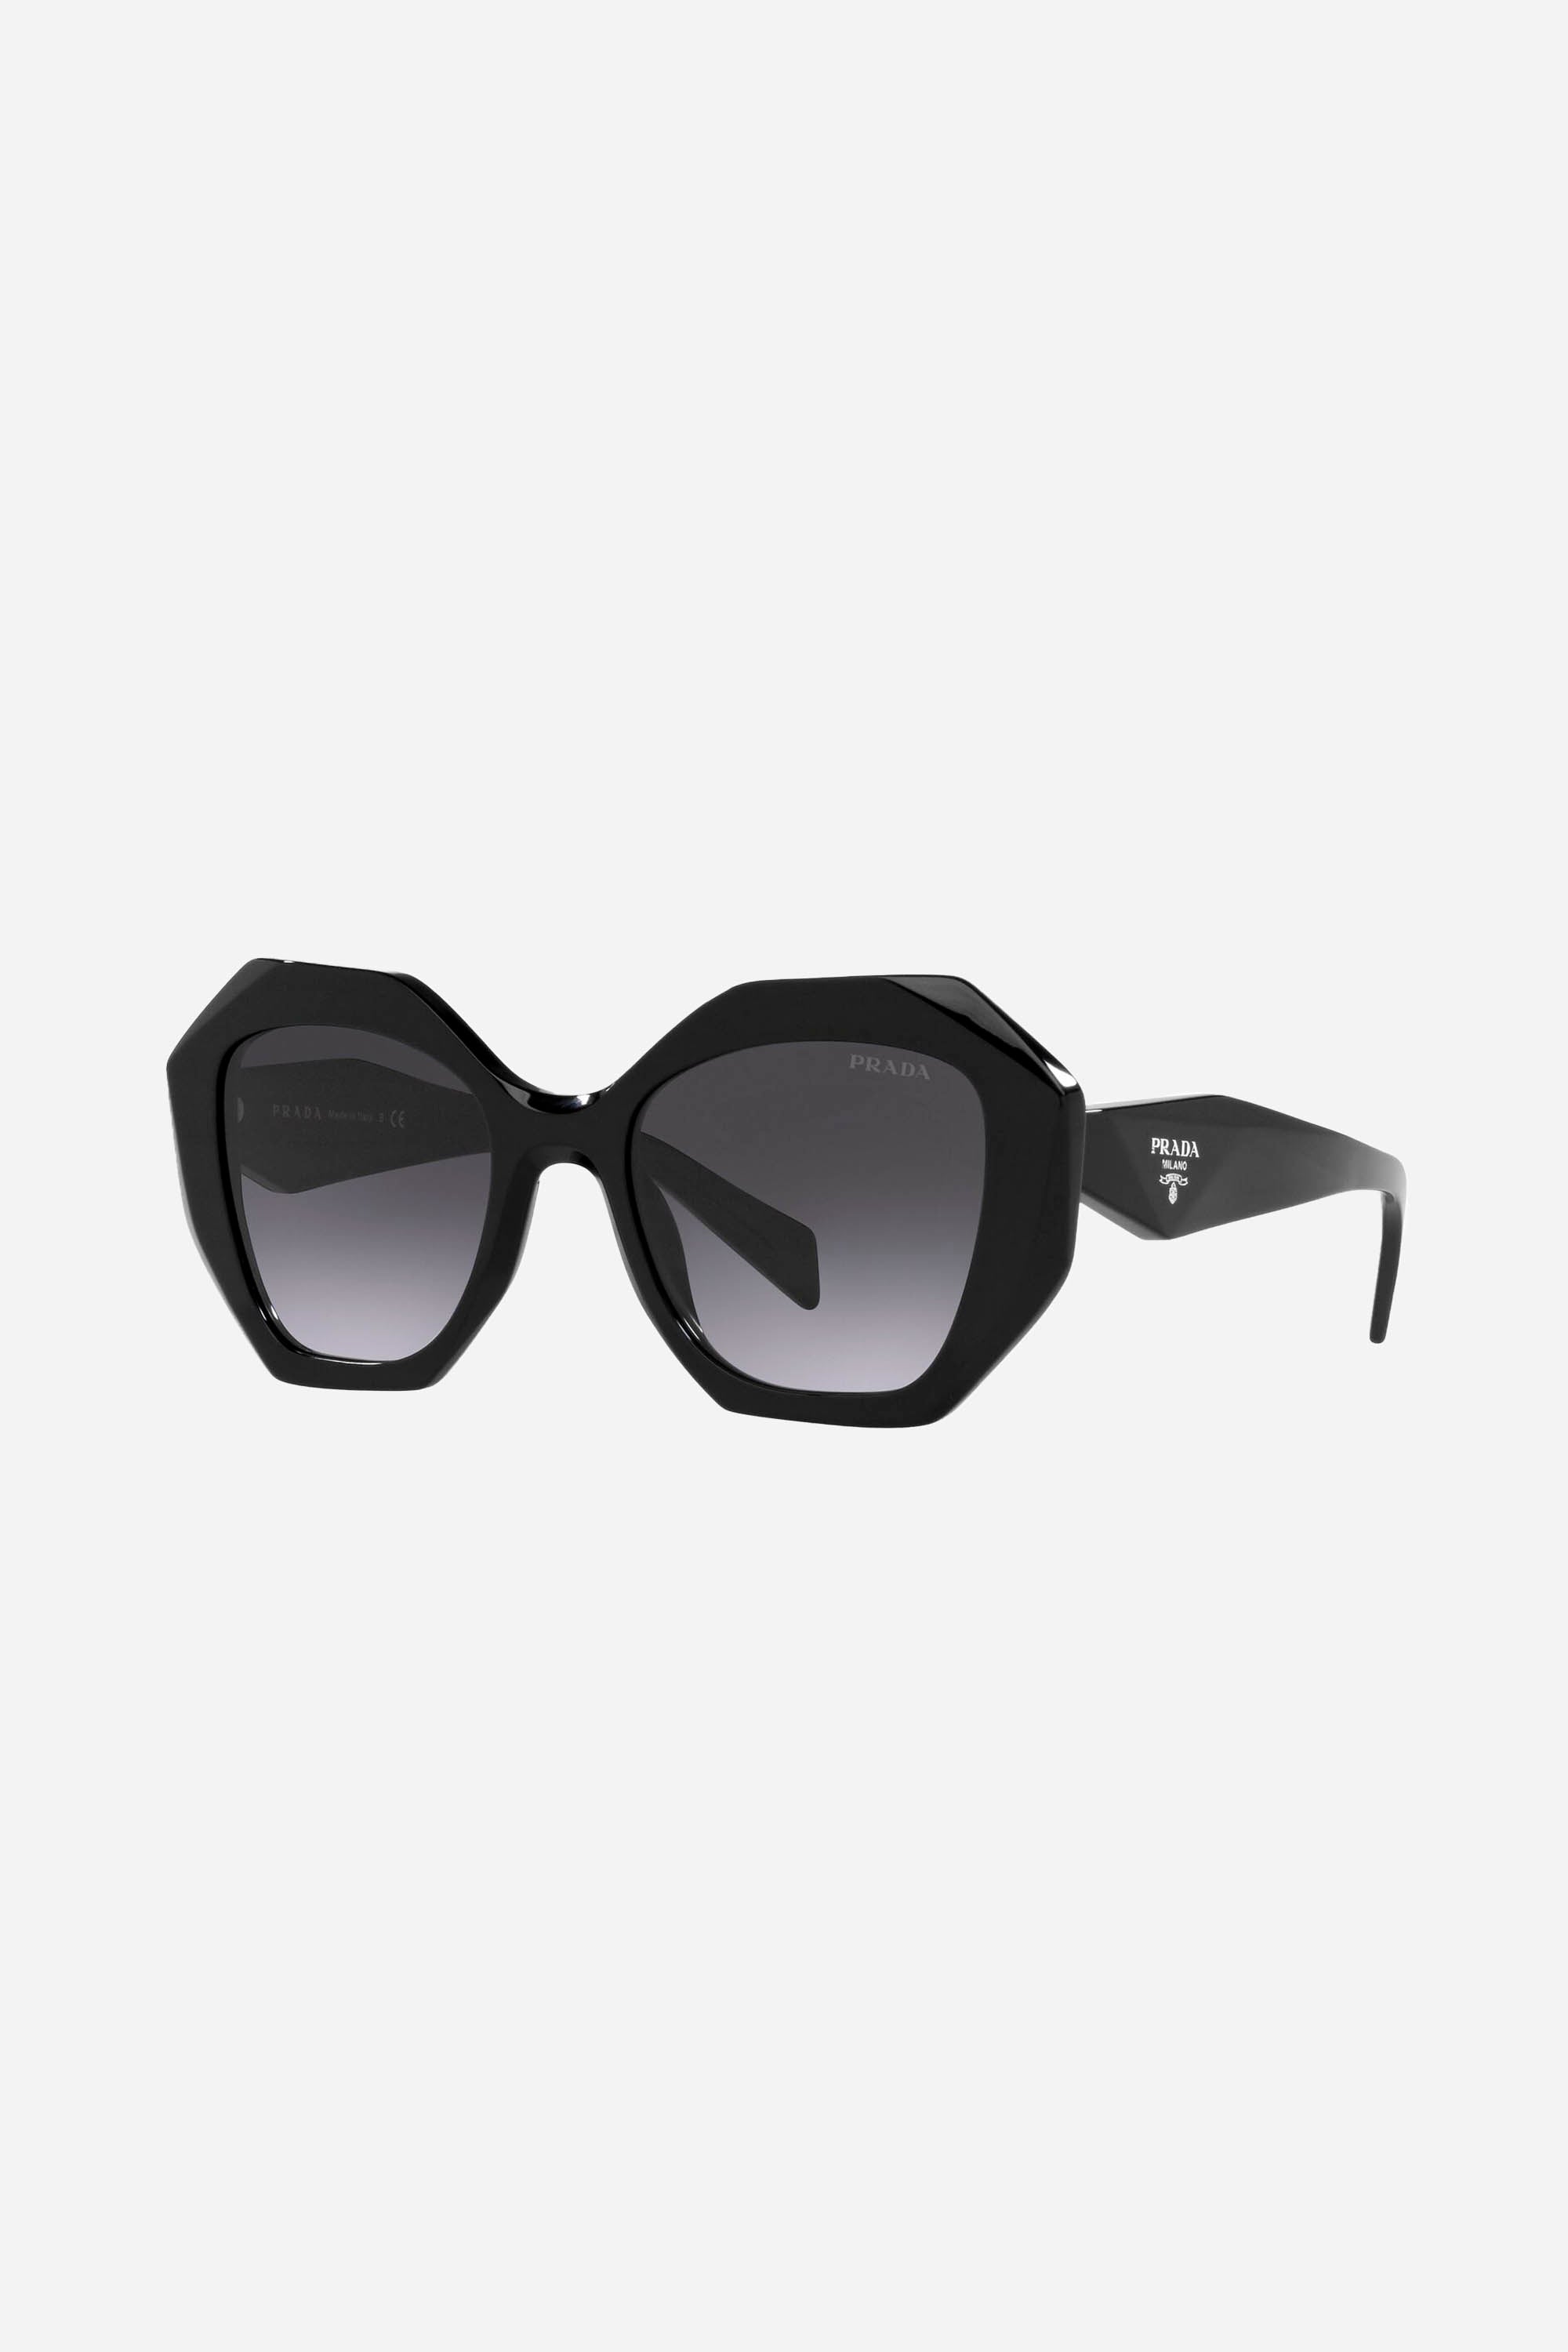 Prada hexagonal black sunglasses